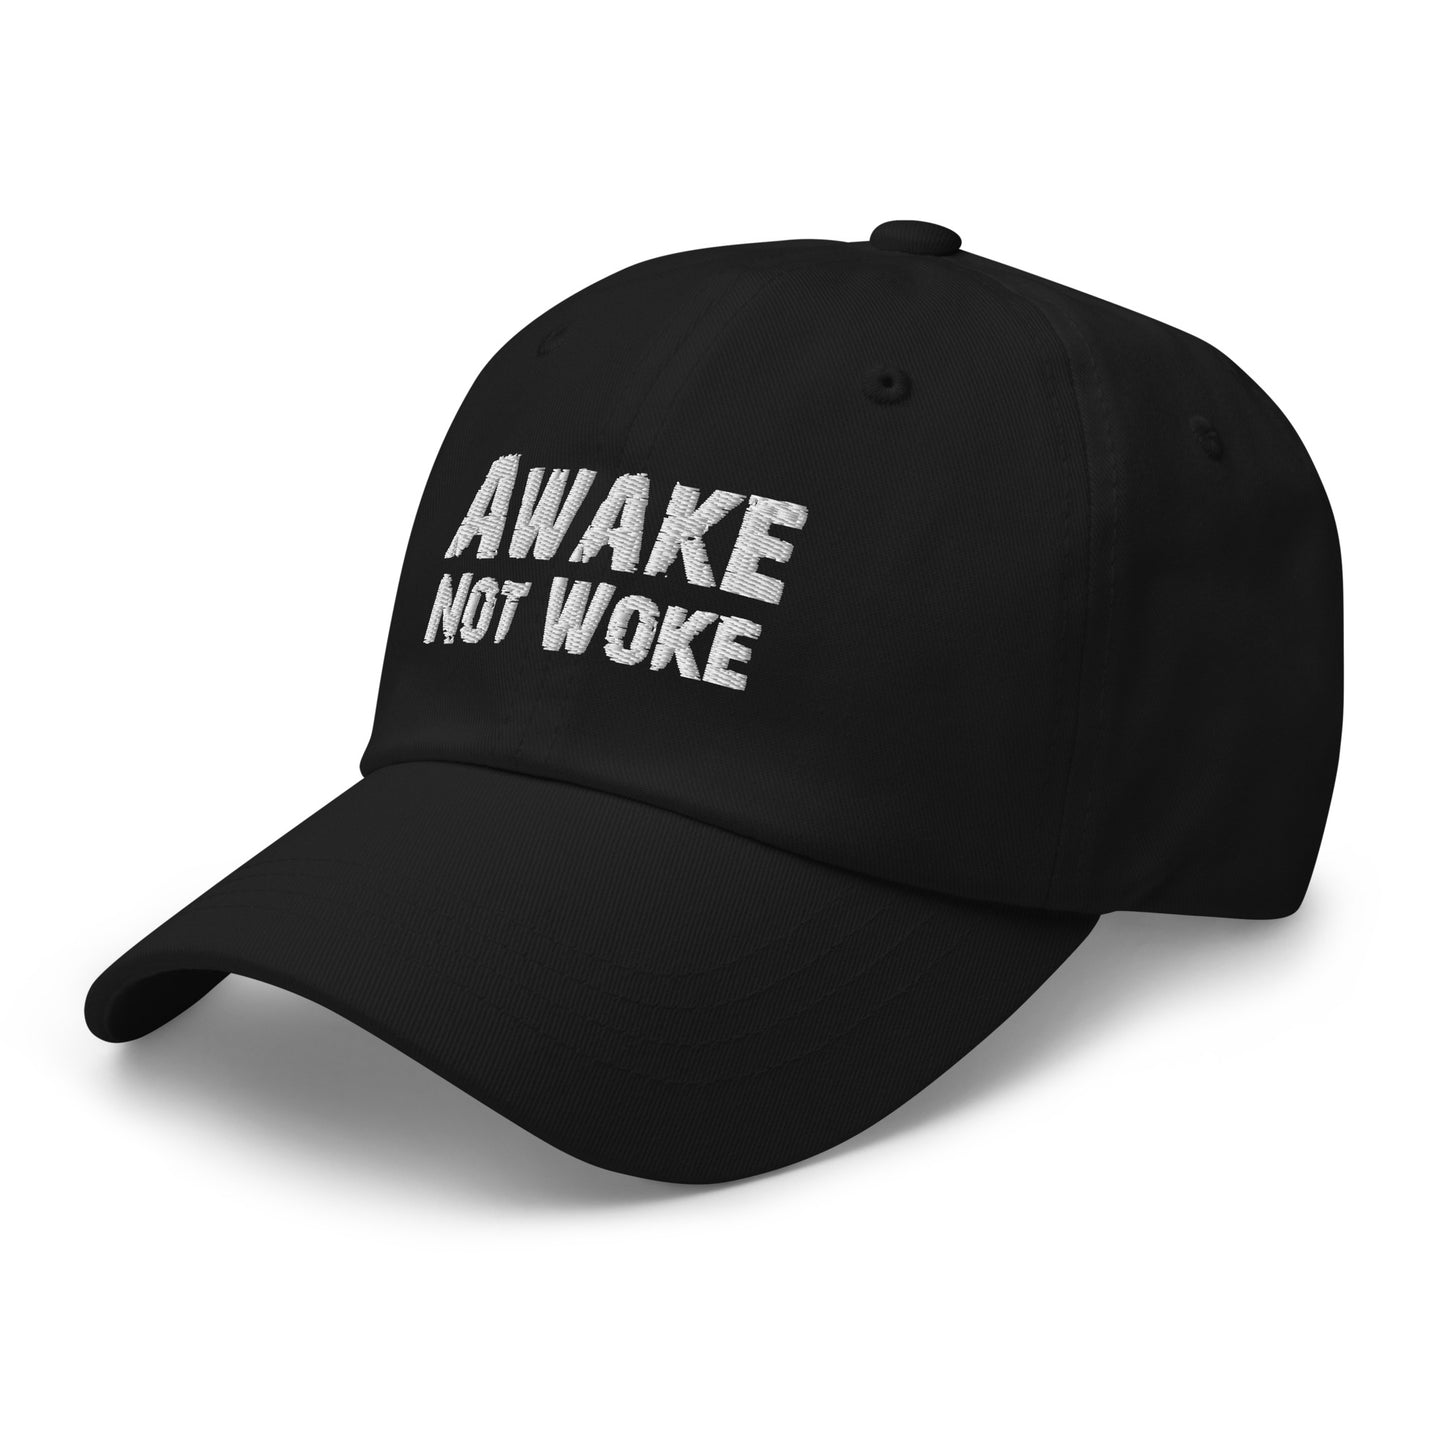 Awake Not Woke hat